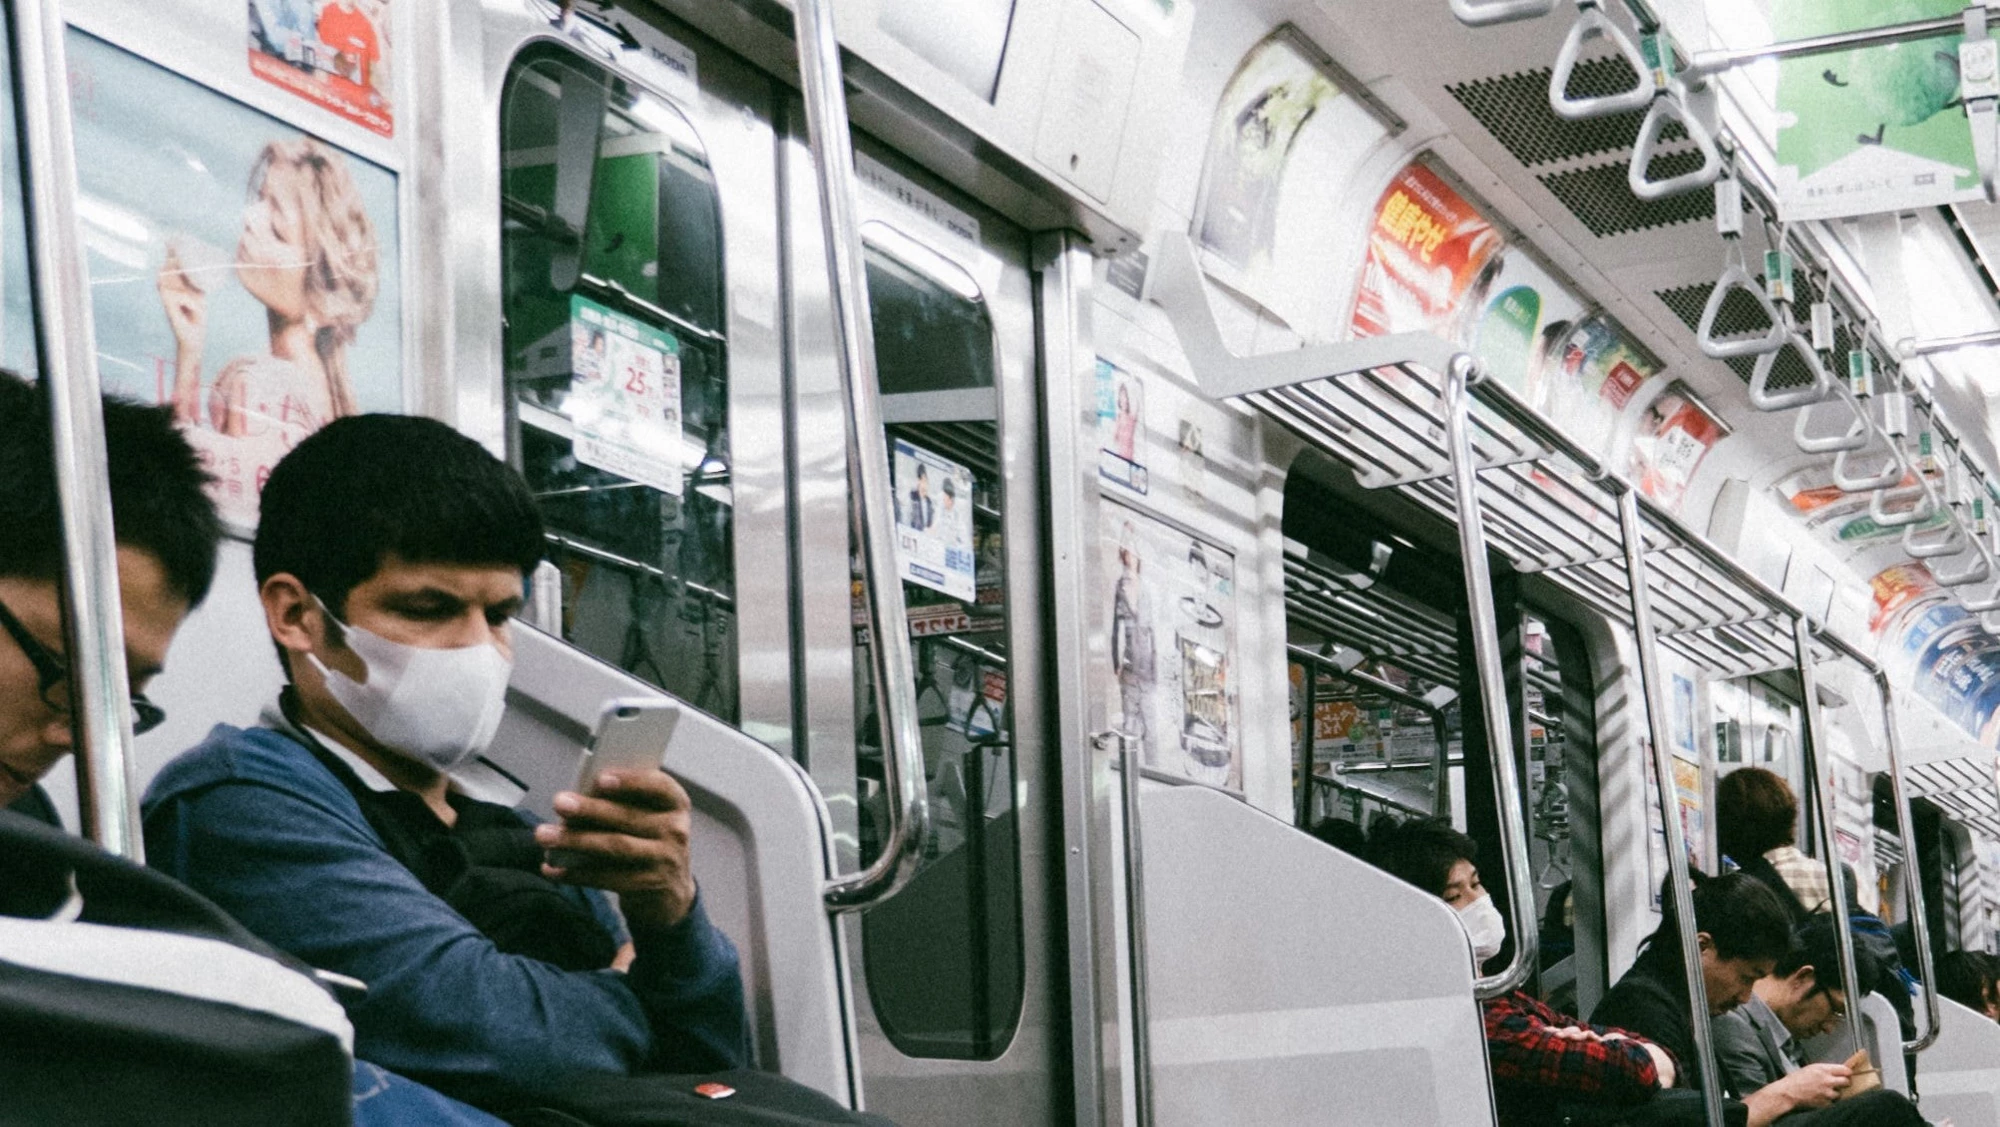 Commuters inside a metro train, Japan. Photo: Max Anderson/Unsplash